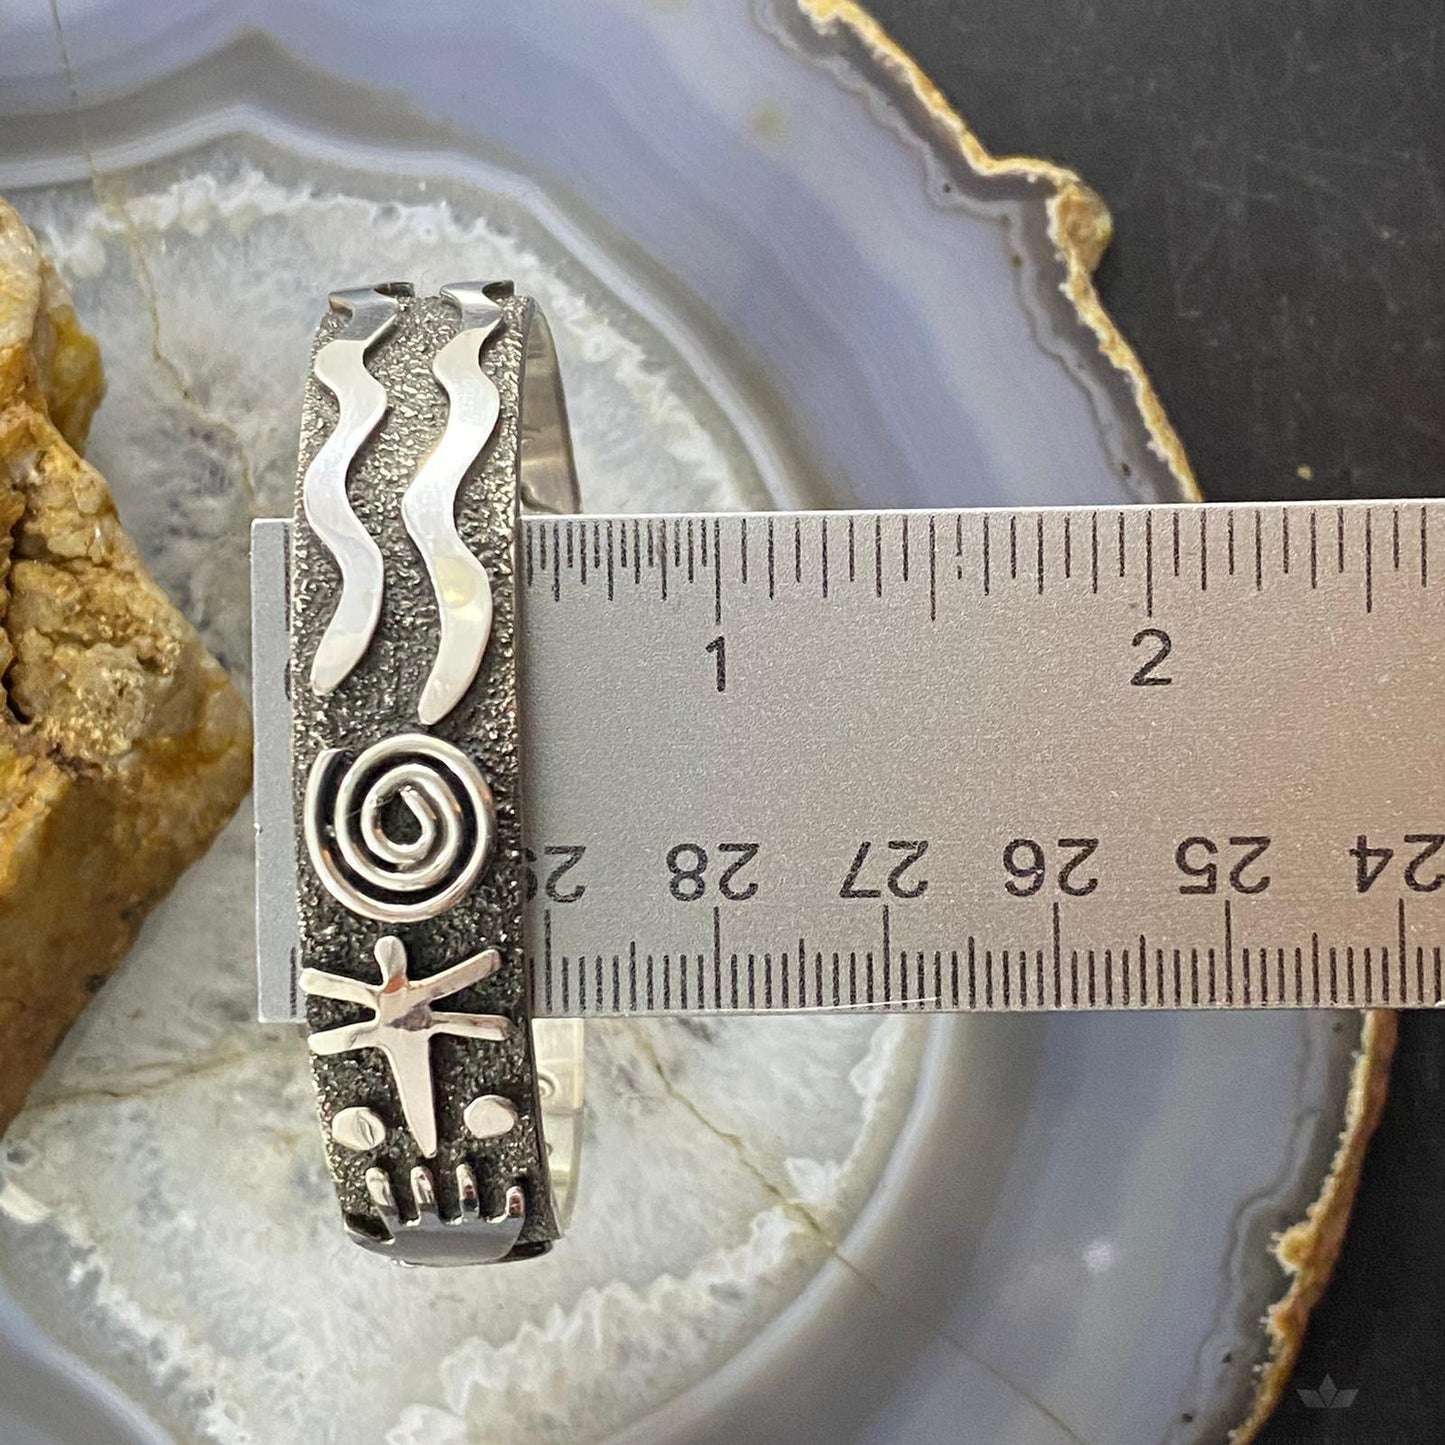 Alex Sanchez Native American Sterling Silver Petroglyph Bracelet For Women #8